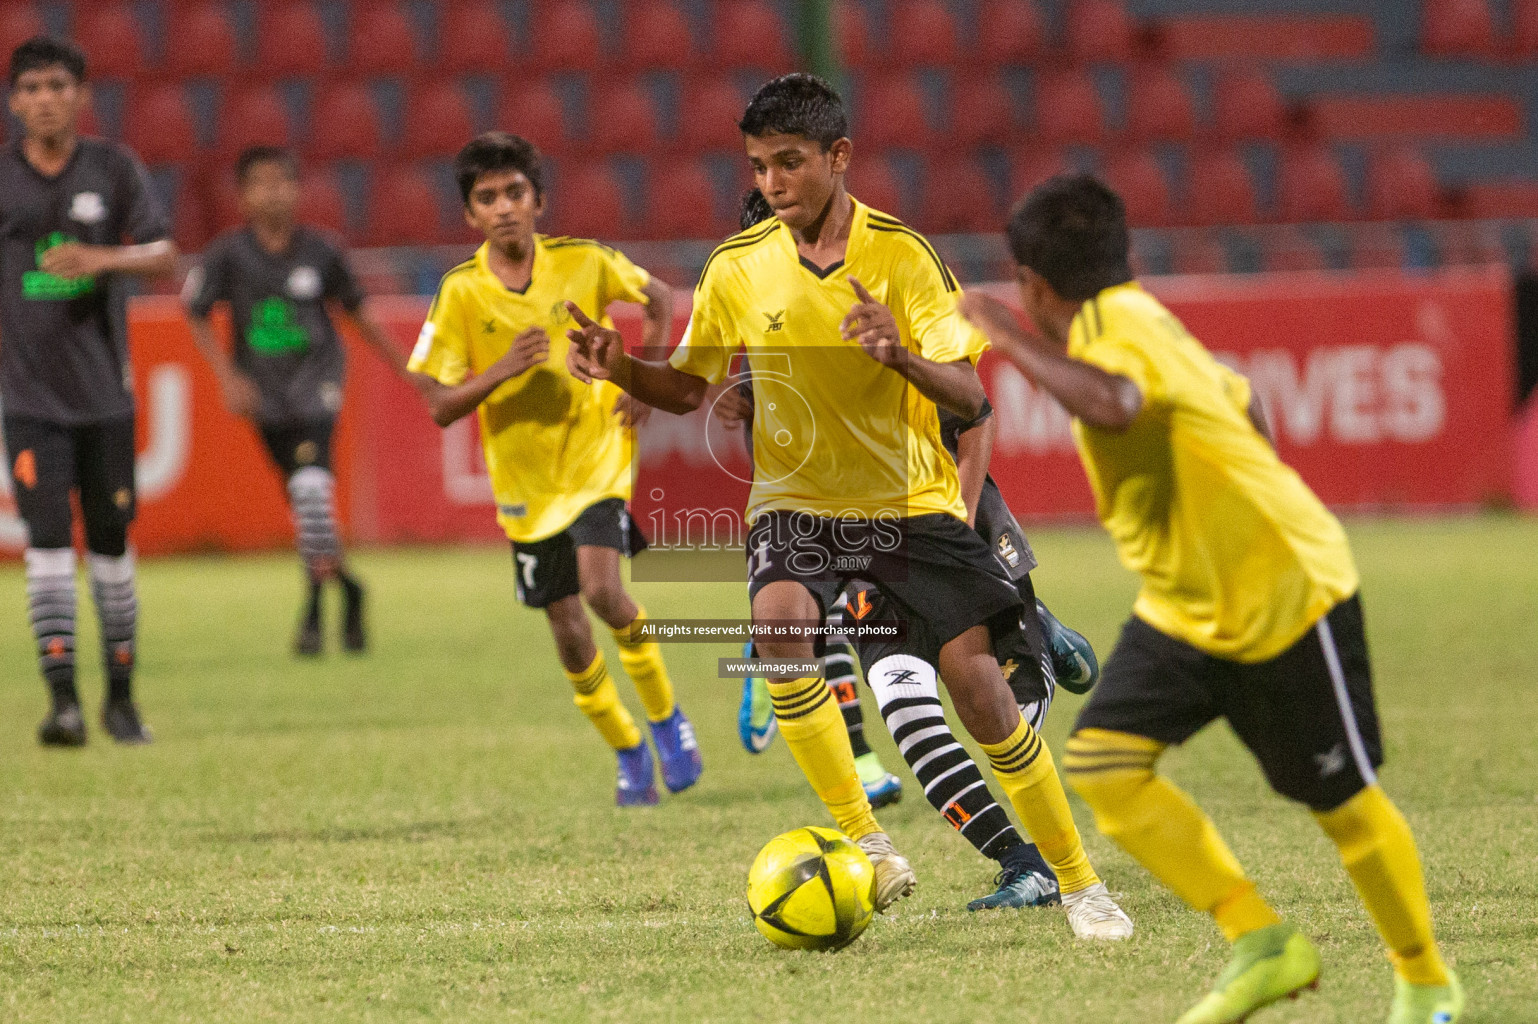 Ghaazee School vs Thaajuddin School in MAMEN Inter School Football Tournament 2019 (U13) in Male, Maldives on 16th April 2019